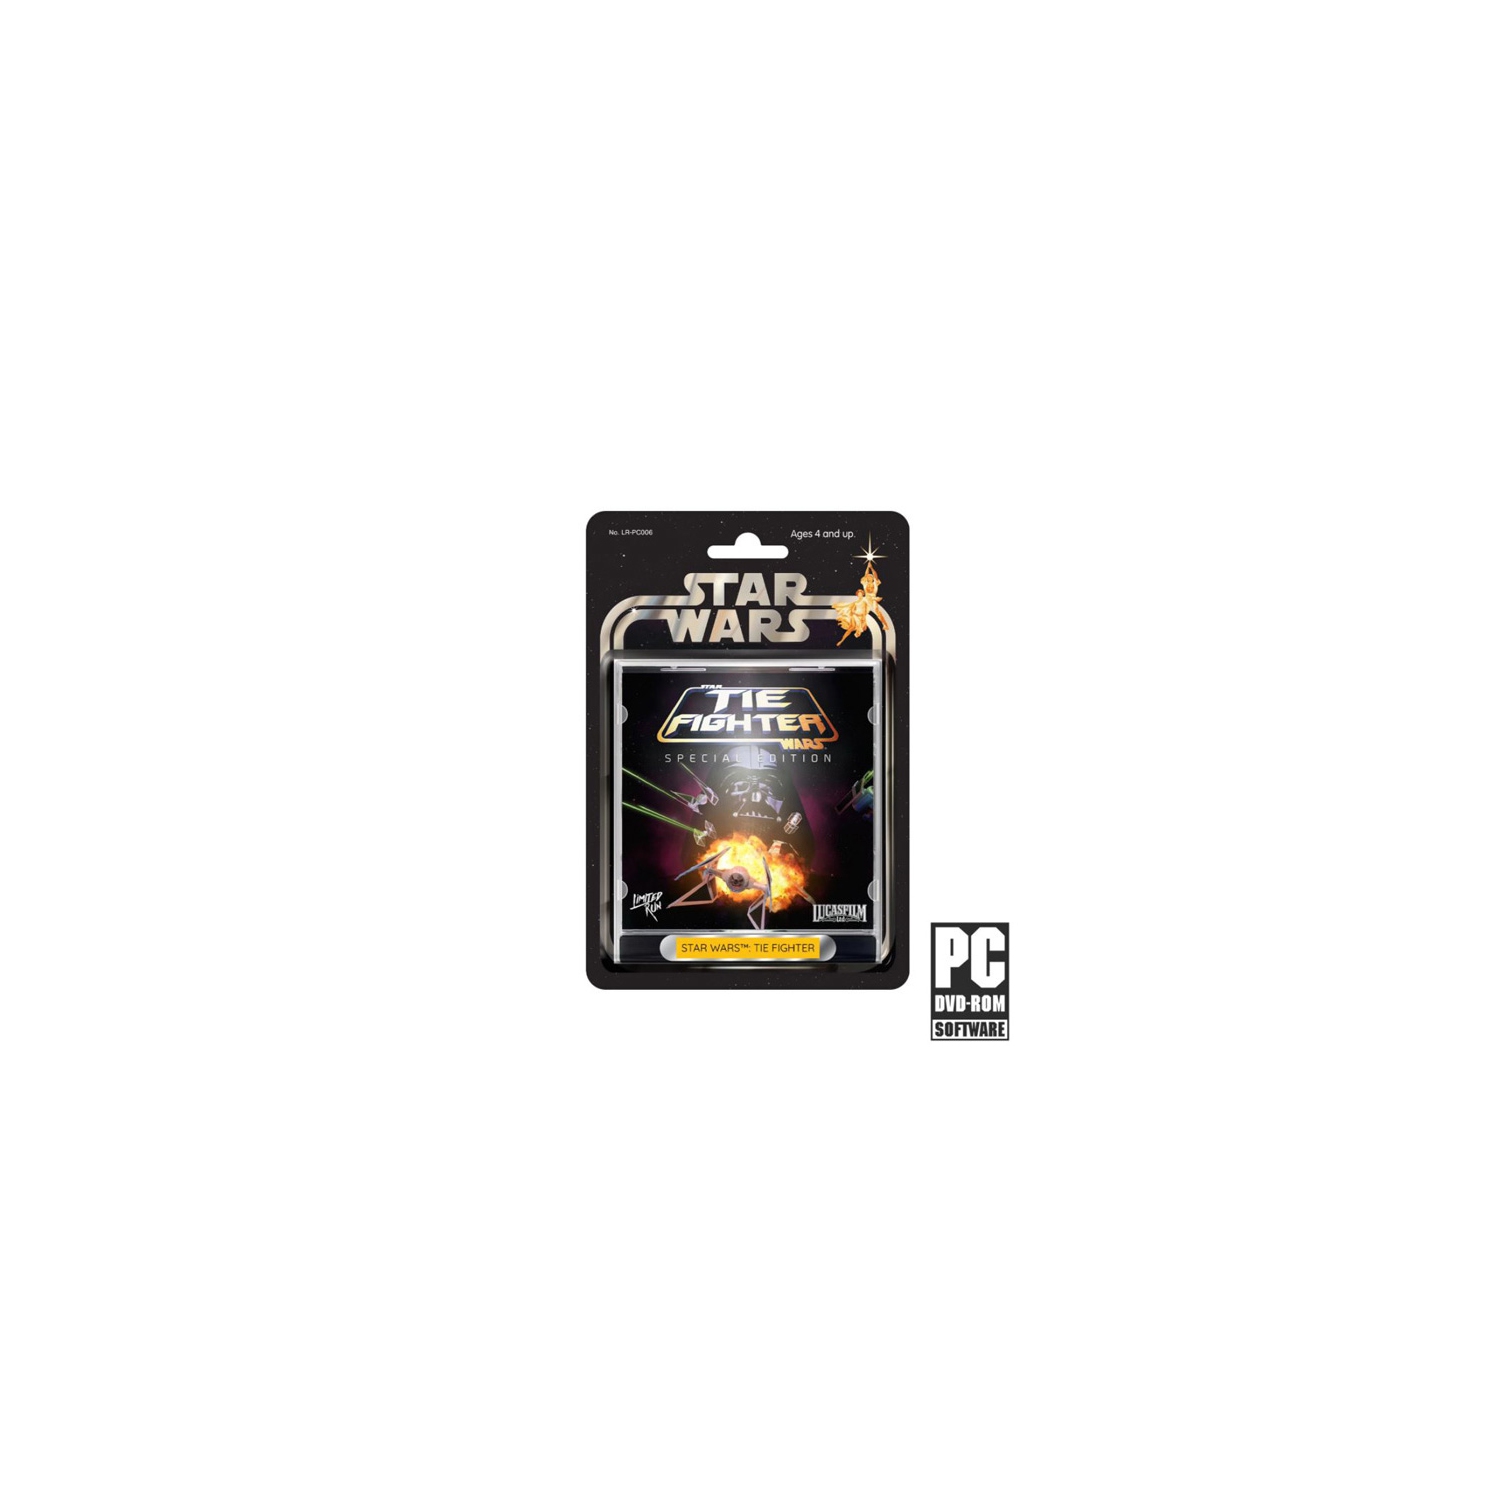 Star Wars Tie Fighter (Limited Run Games) (PC)